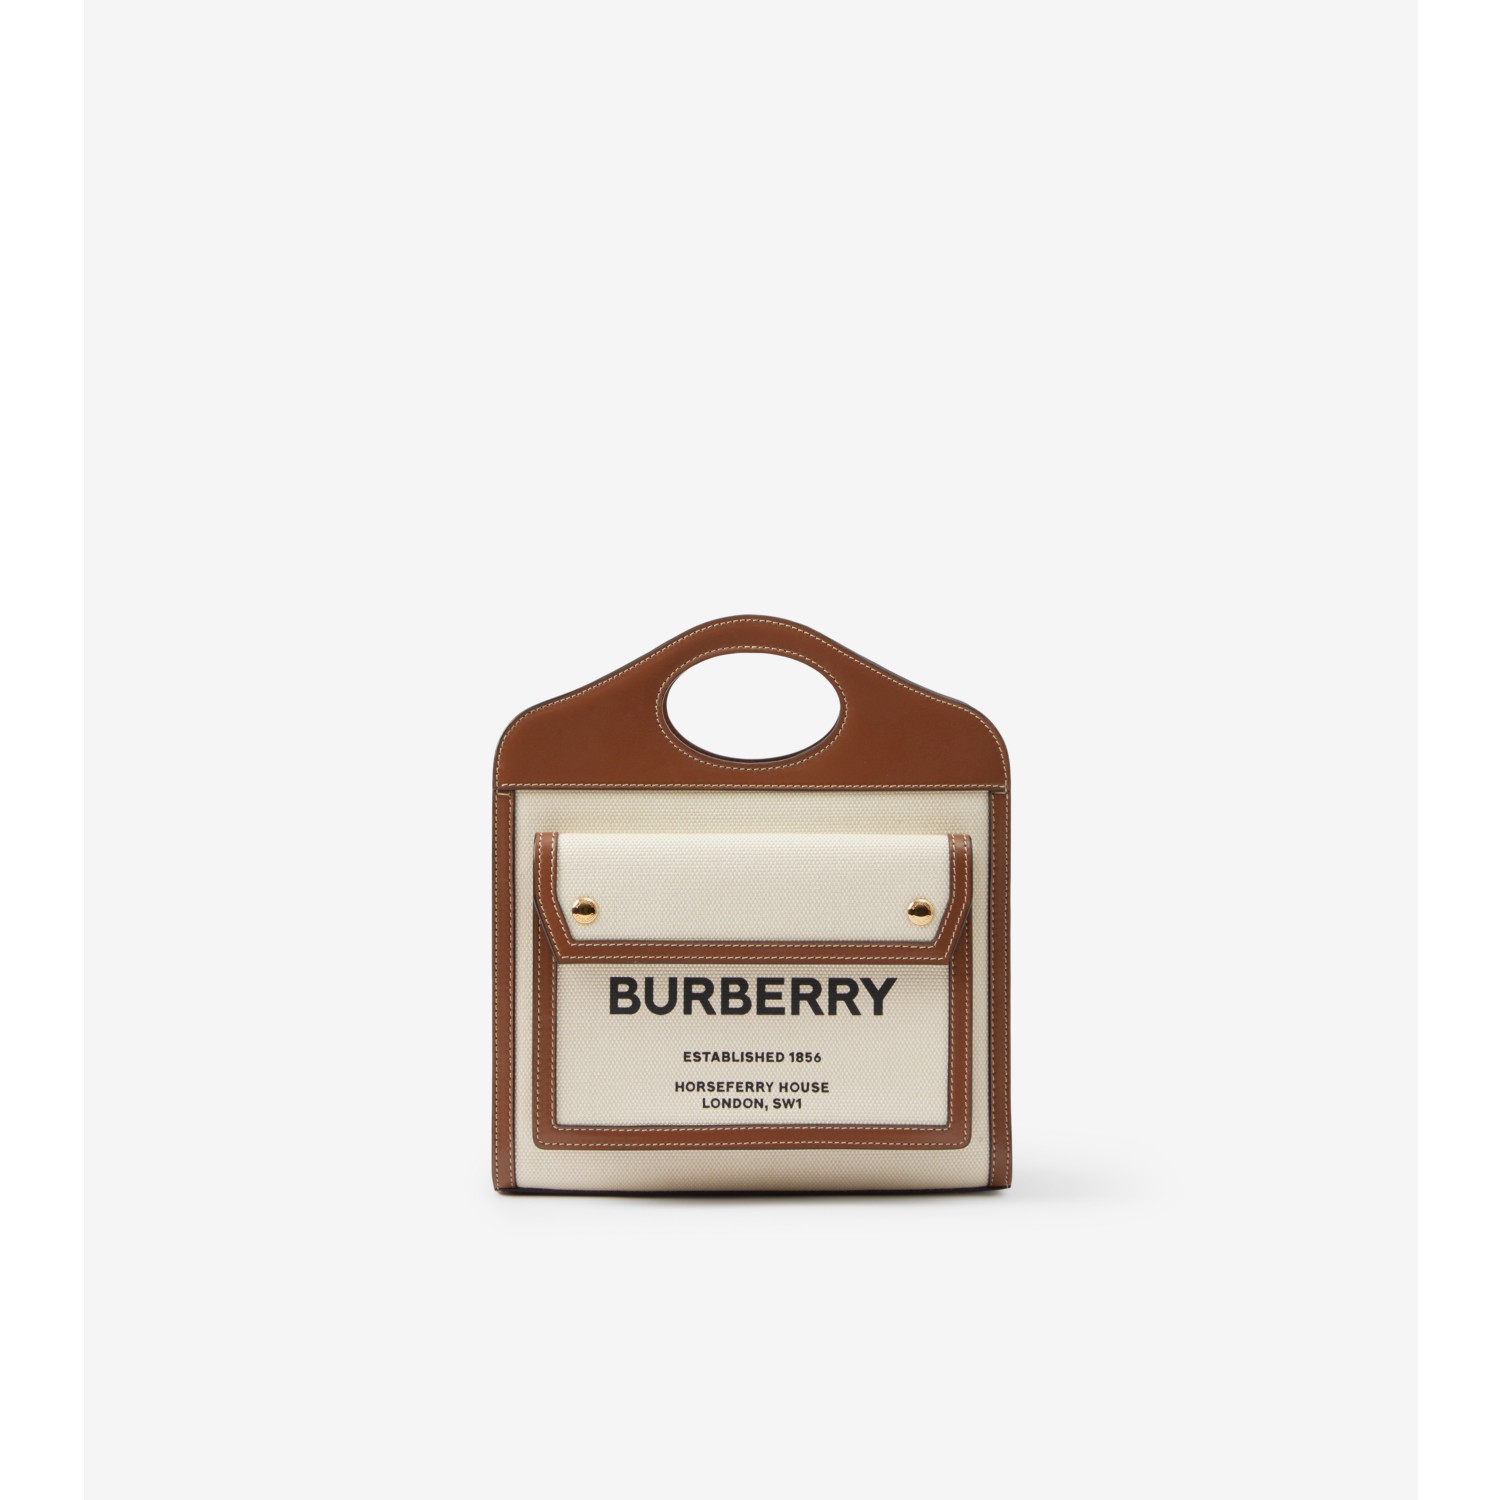 burberry bag price